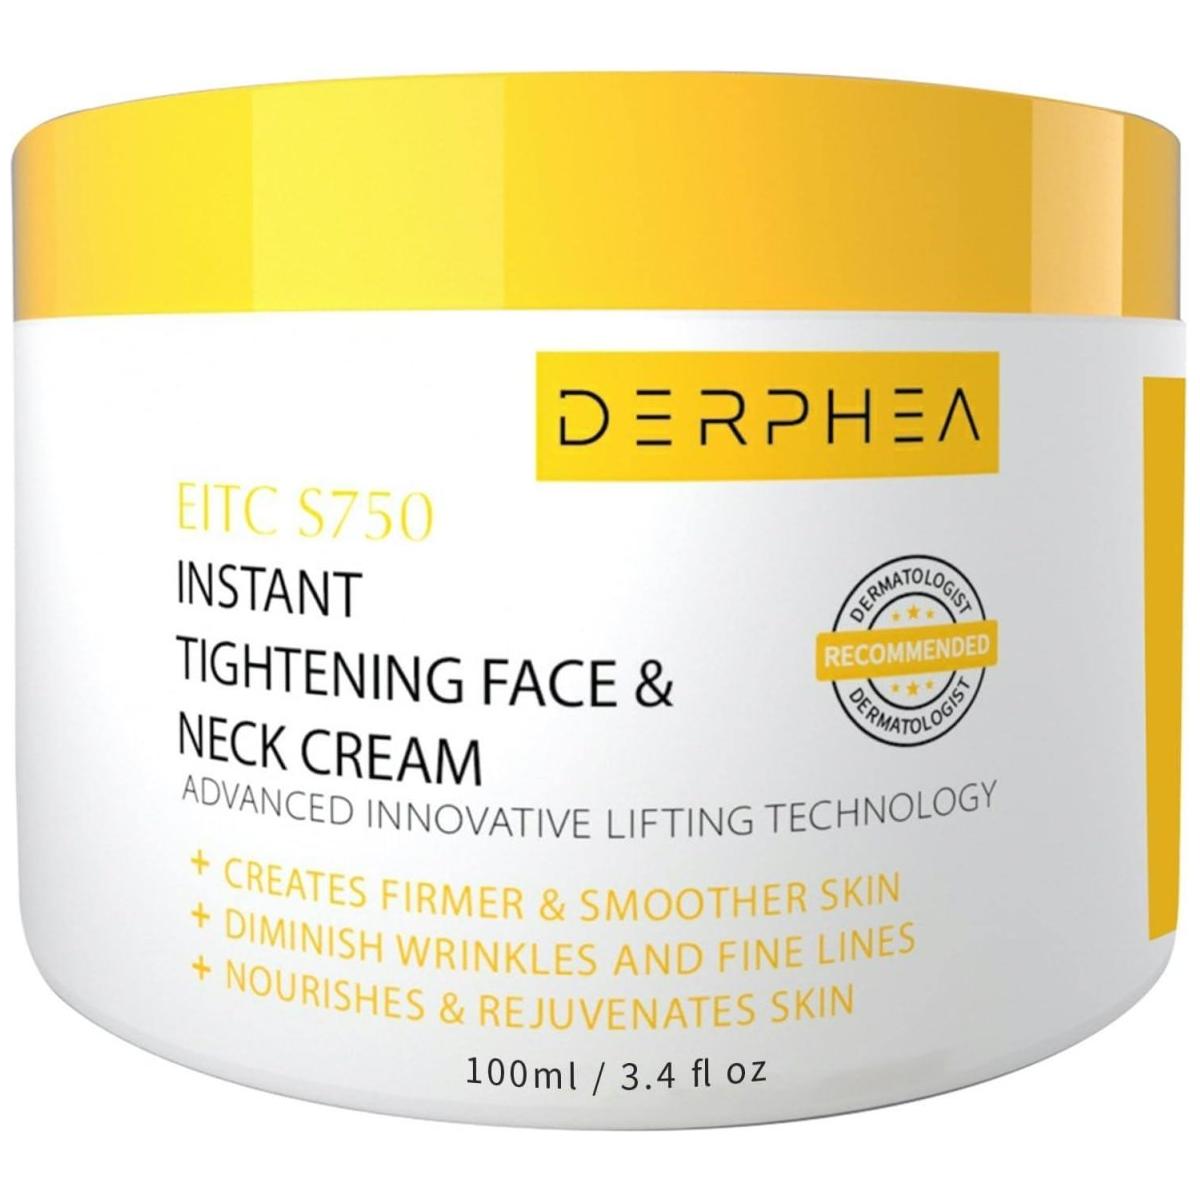 Derphea Instant Tightening Face & Neck Cream - 100ml - Glam Global UK